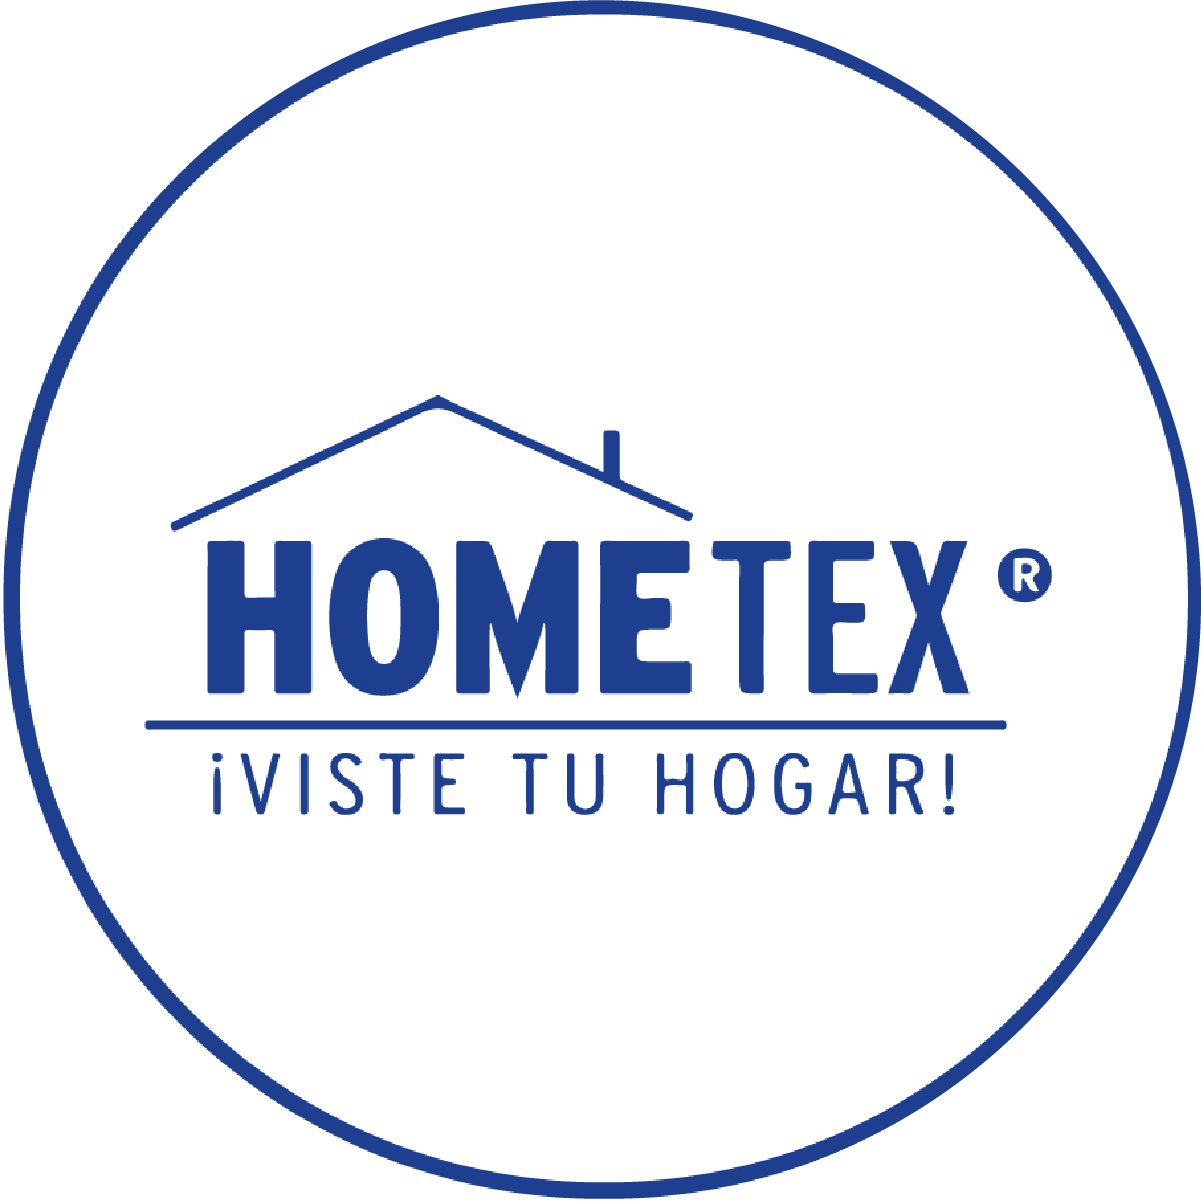 HOMETEX